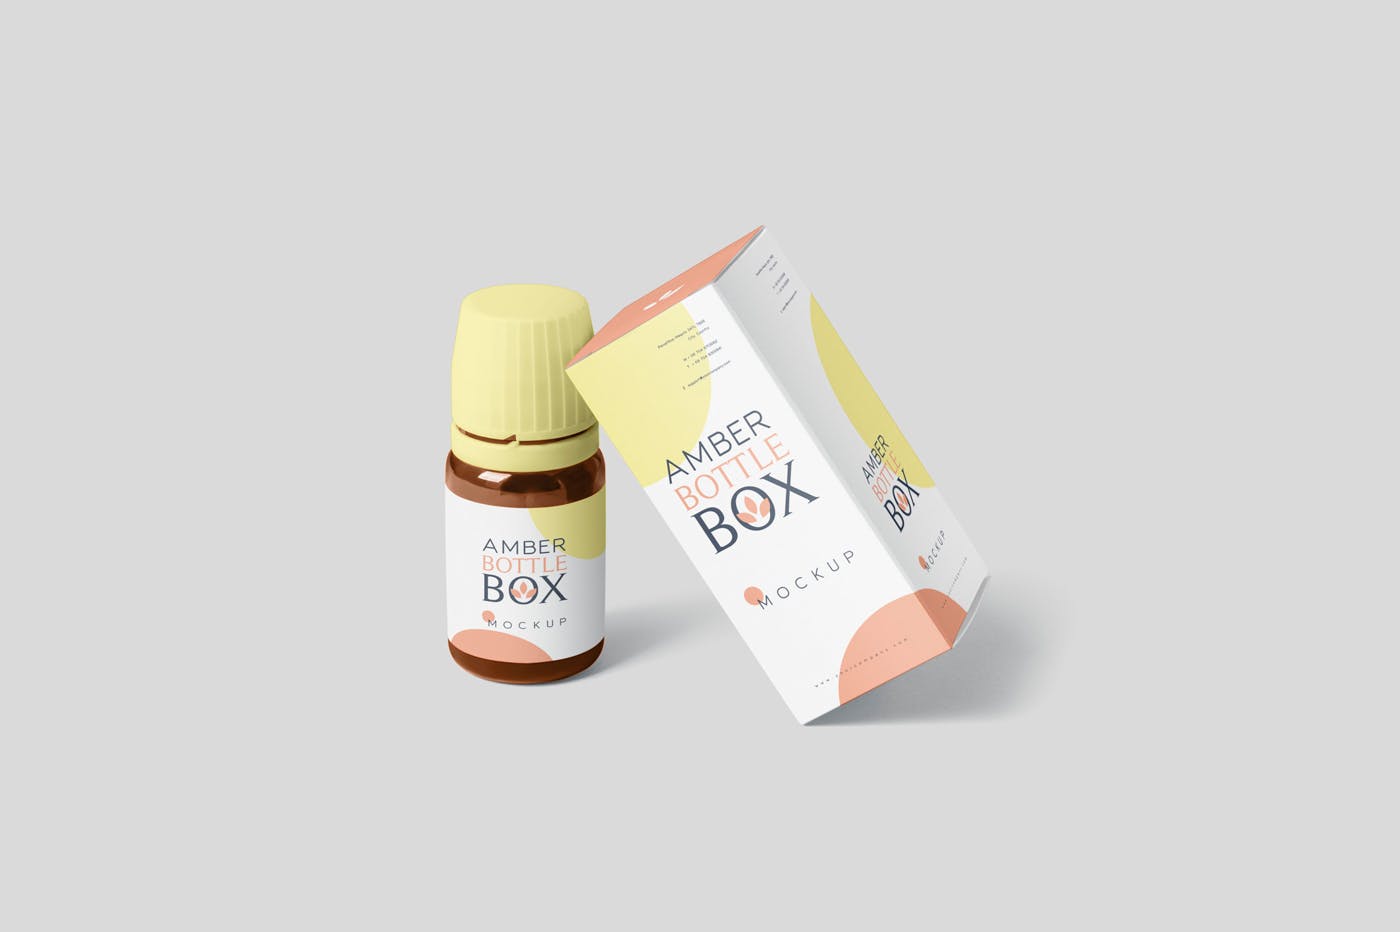 药物瓶&包装纸盒设计图素材库精选模板 Amber Bottle Box Mockup Set插图(4)